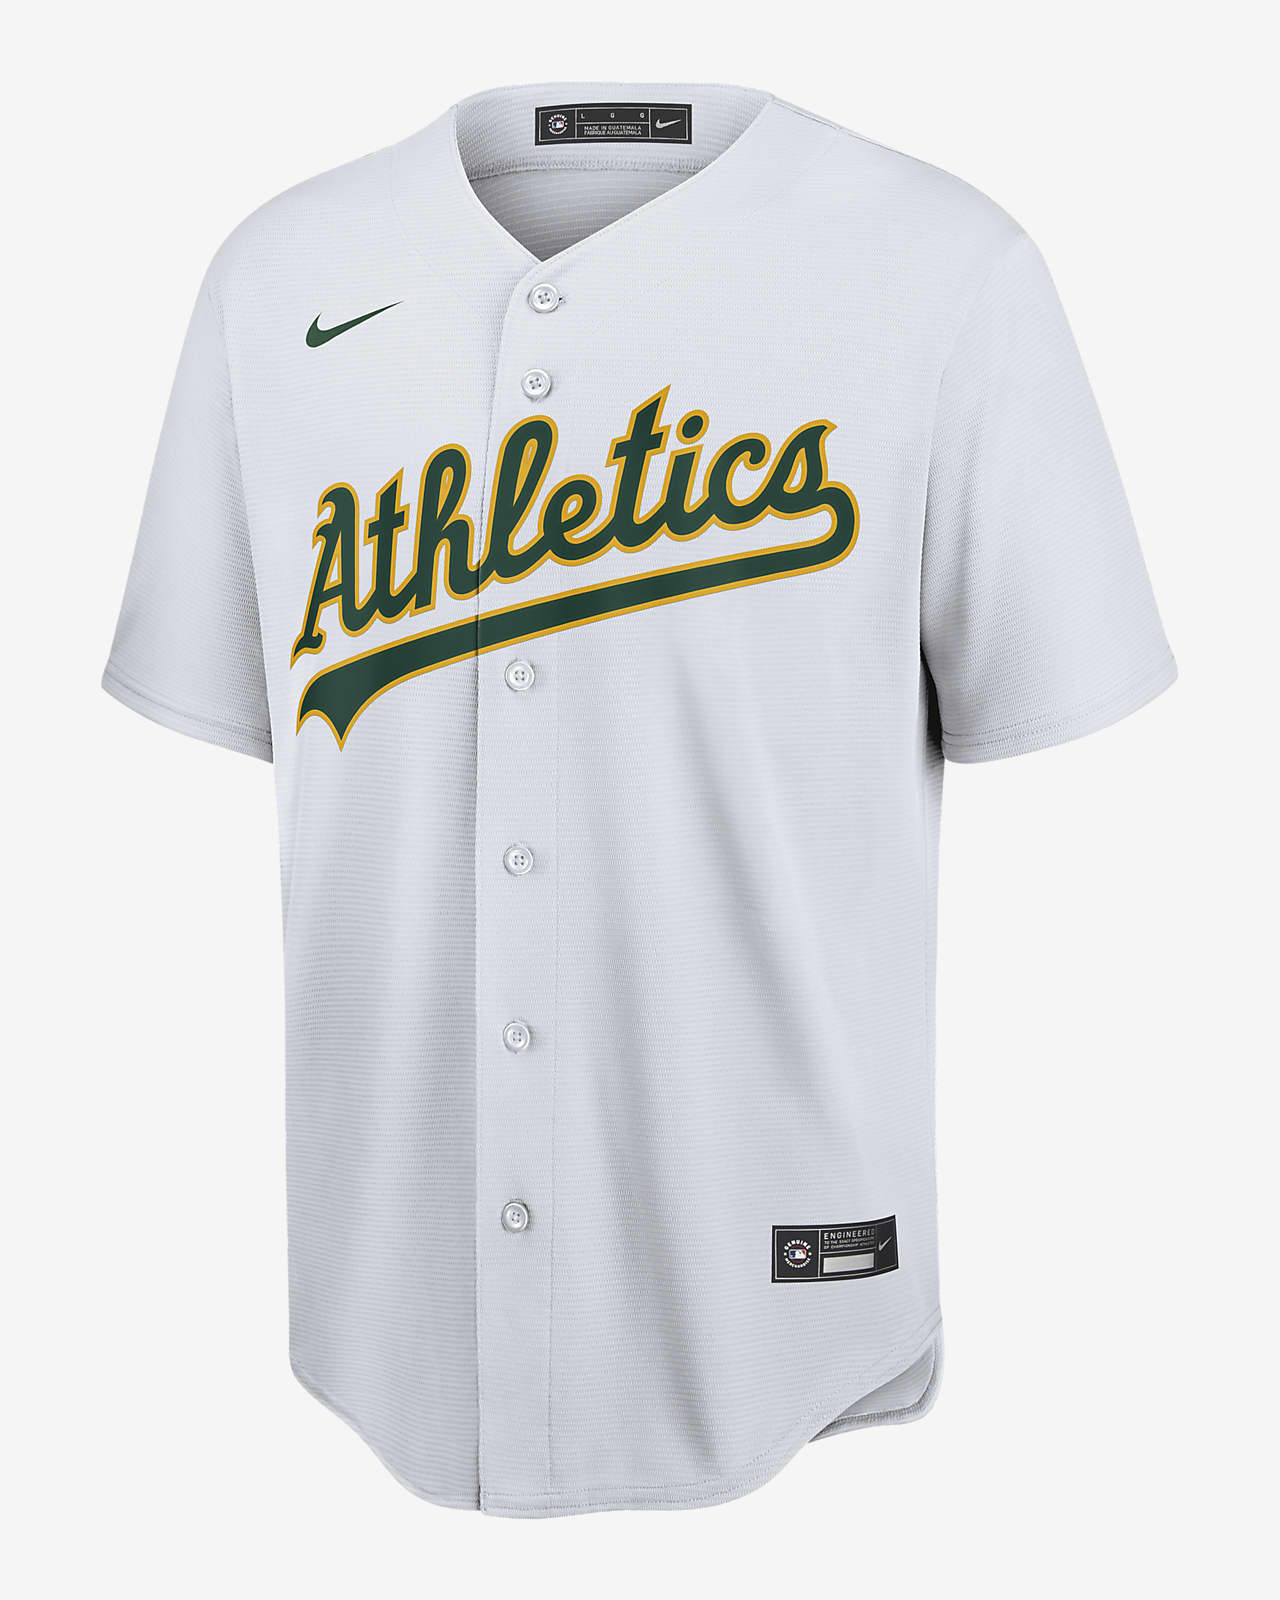 MLB Oakland Athletics (Khris Davis) Men's Replica Baseball Jersey.